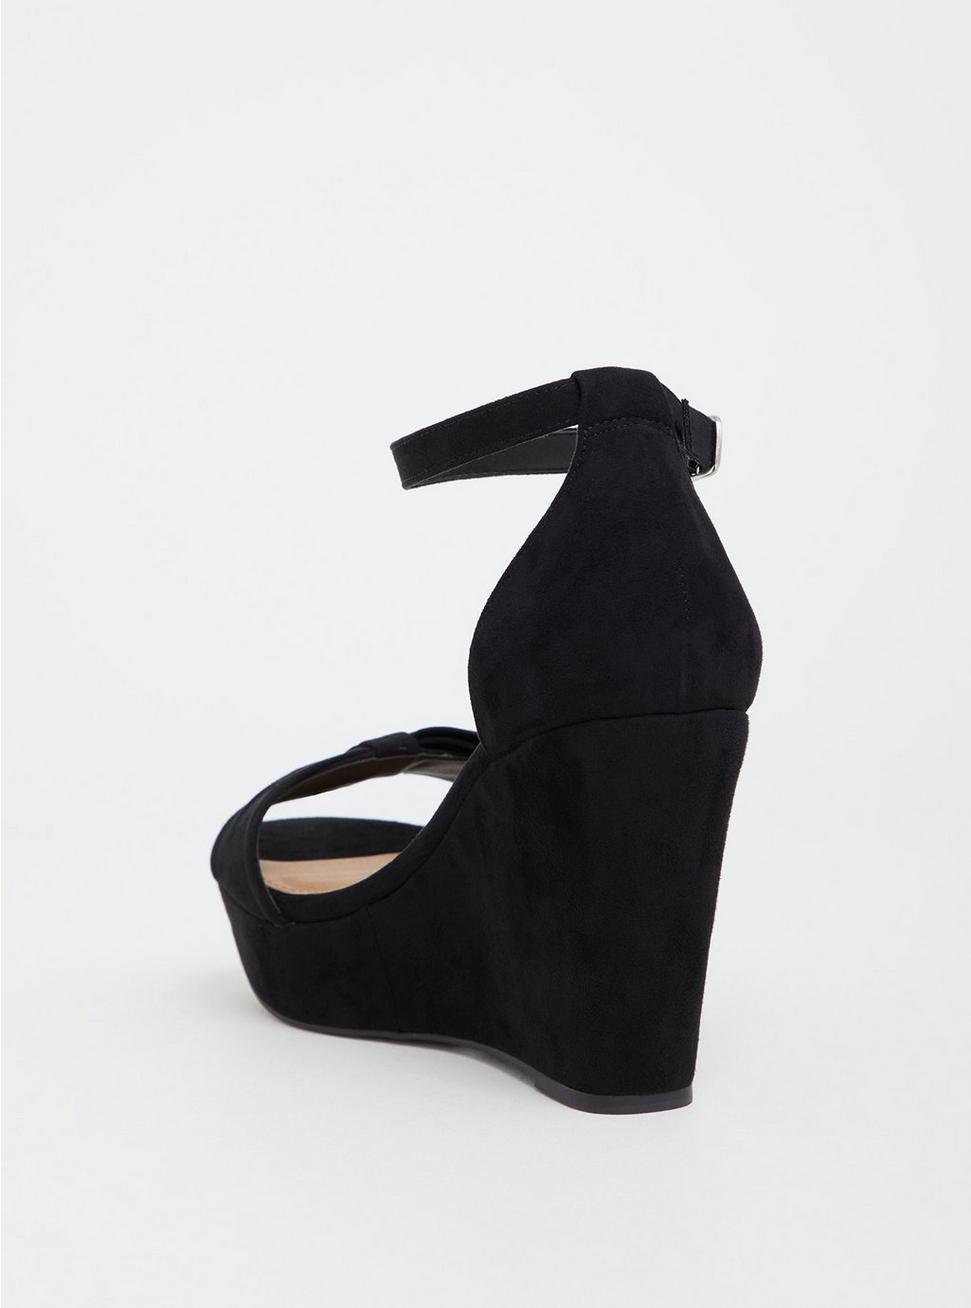 Plus Size - Black Faux Suede Bow Wedge Sandal (Wide Width) - Torrid